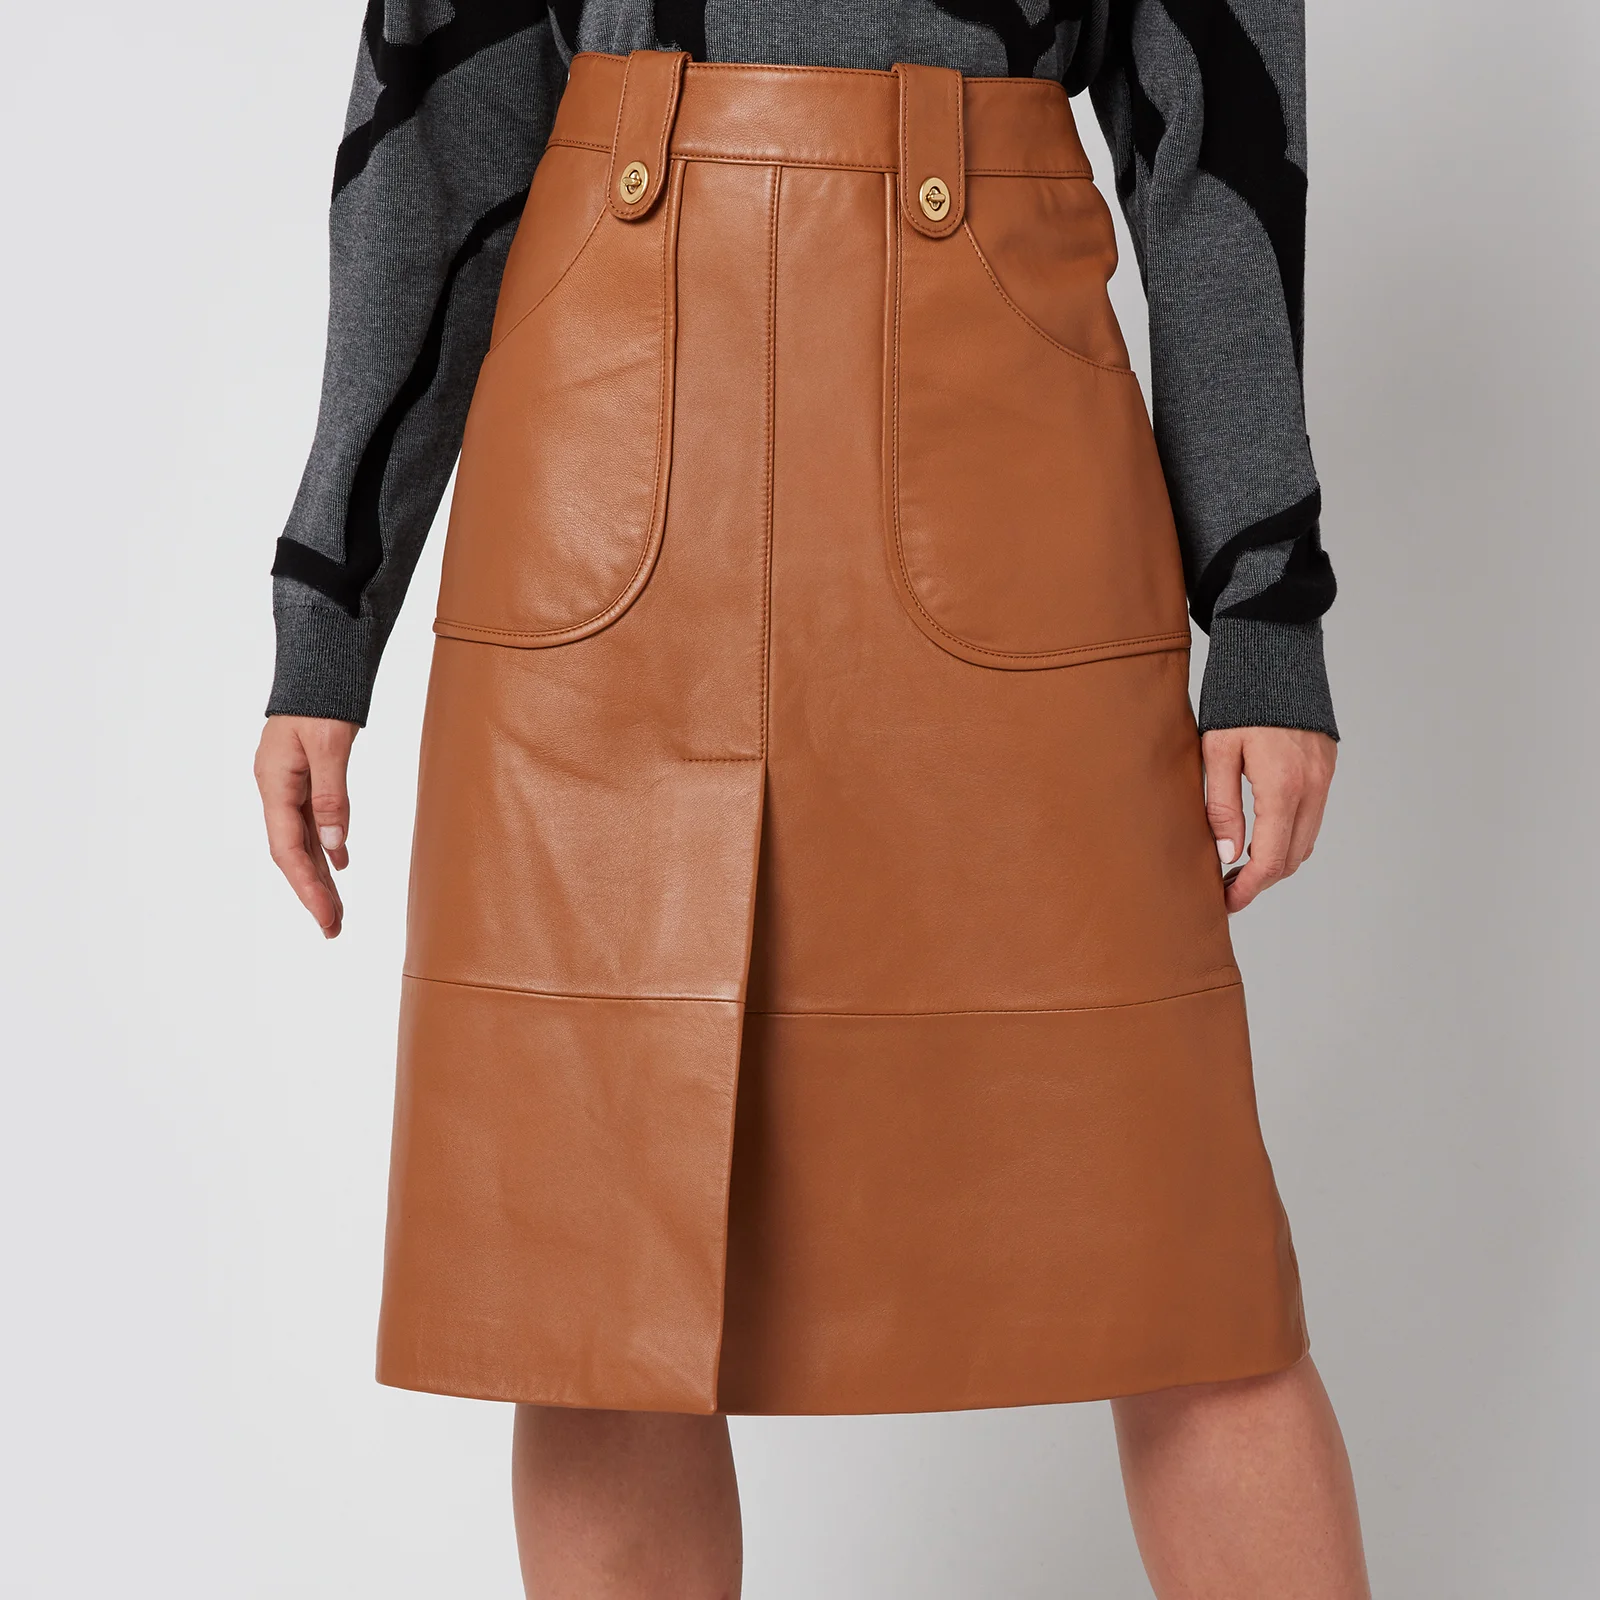 Coach Women's Leather Midi Skirt - Pecan Image 1